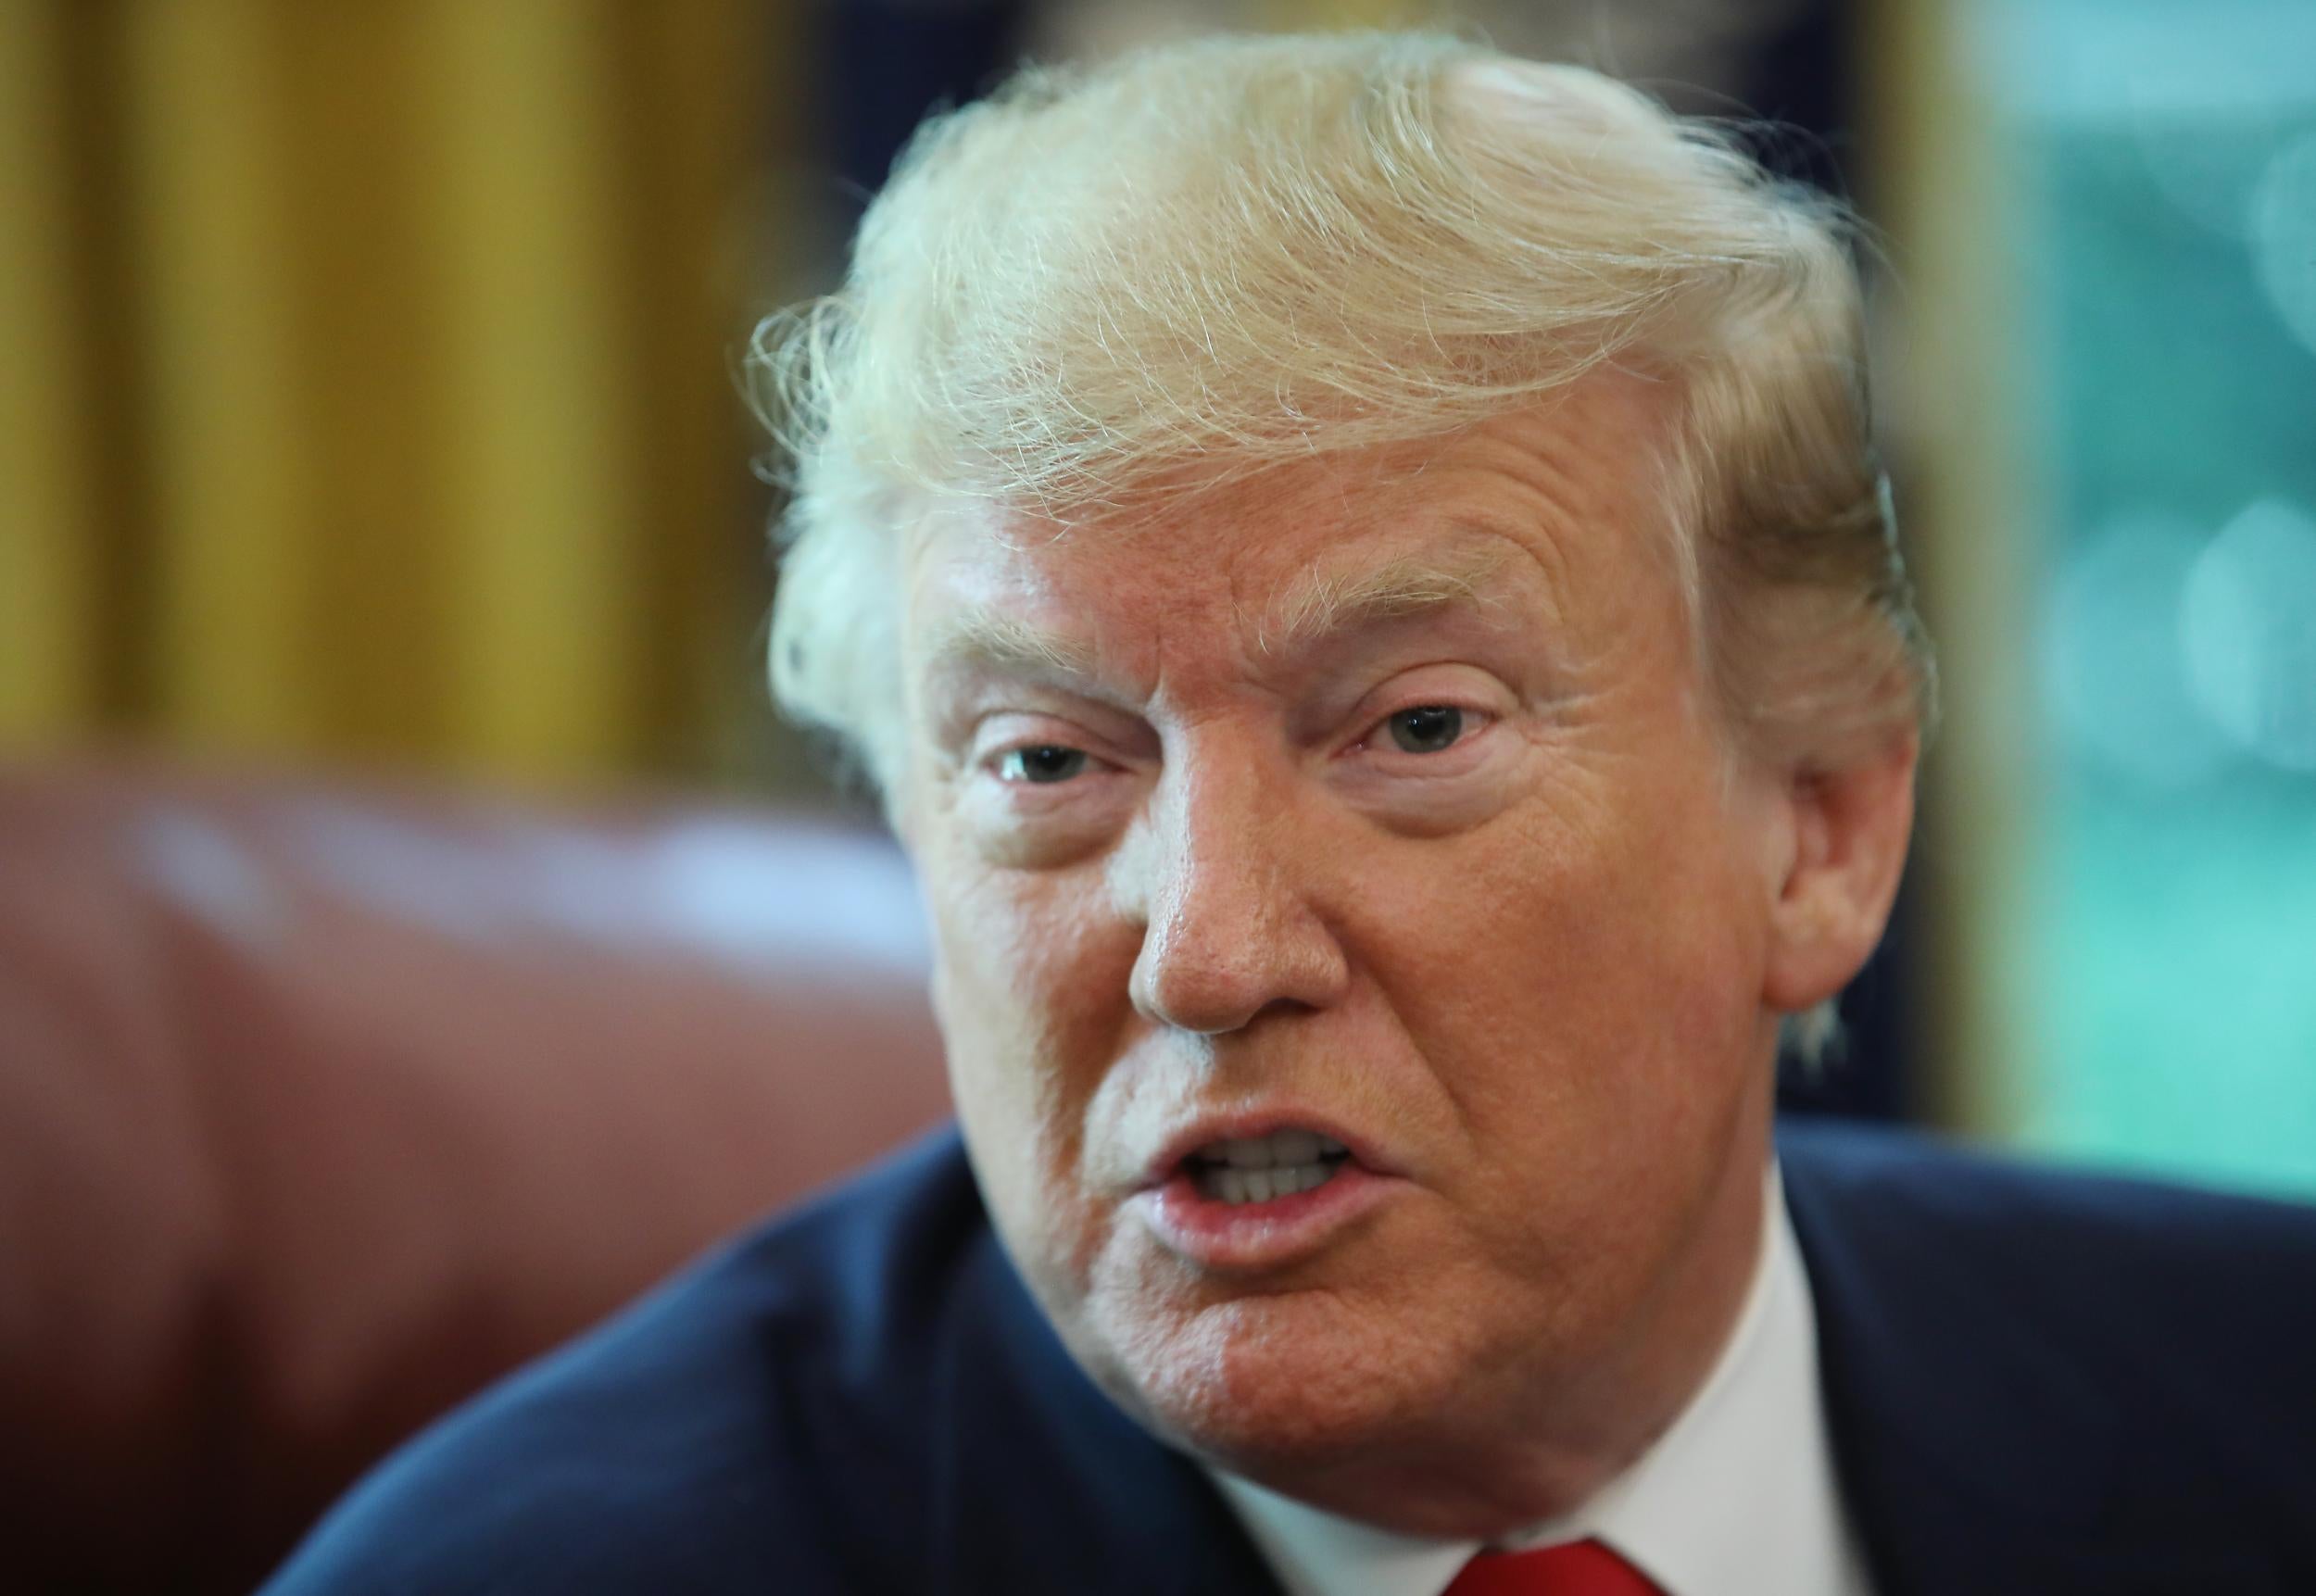 President Trump disagrees with Rapinoe